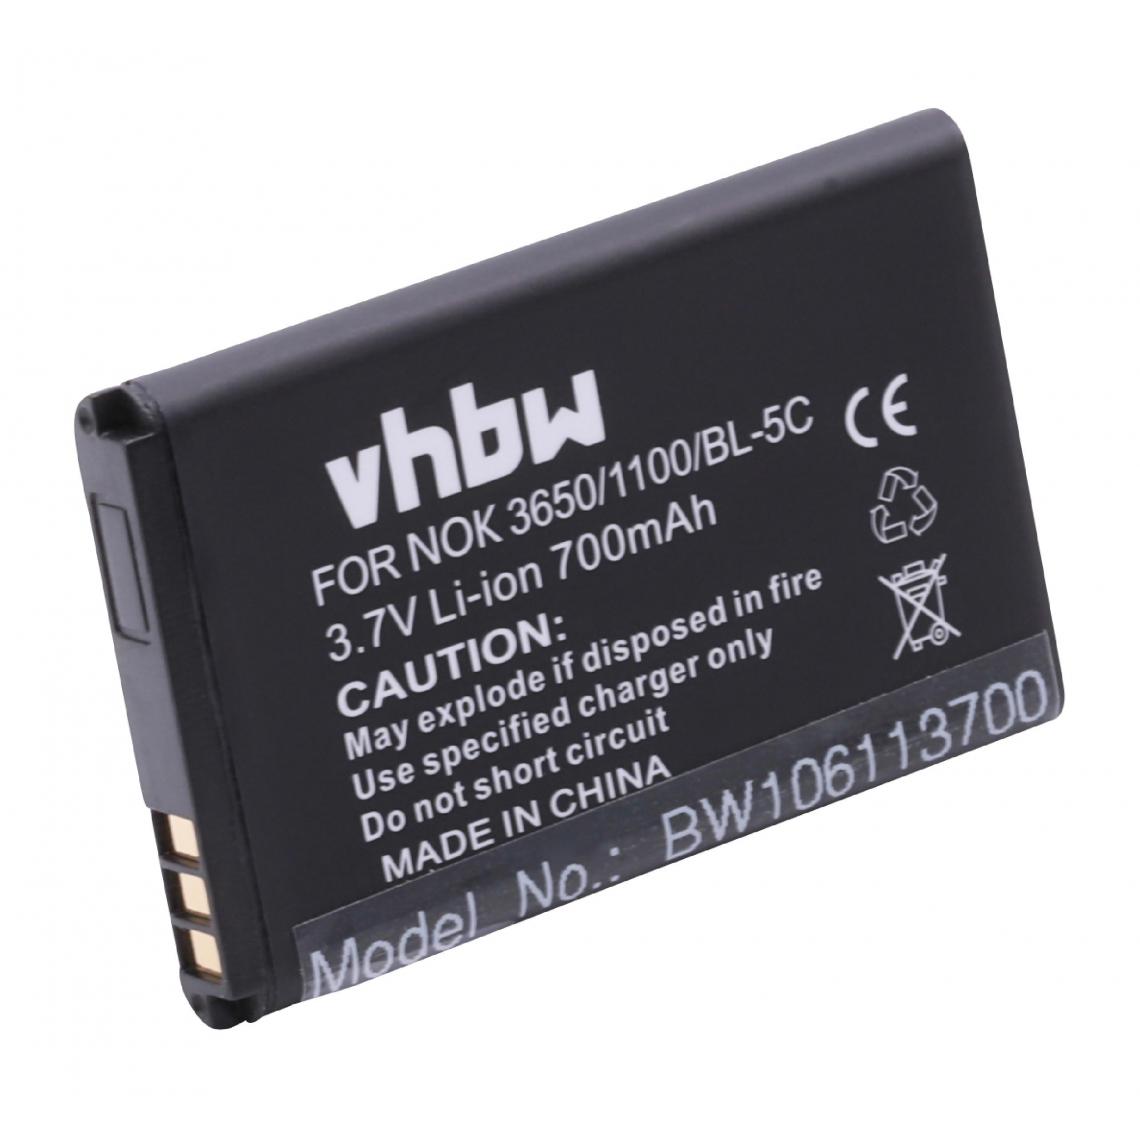 Vhbw - vhbw Batterie compatible avec Nokia 2700 Classic, 2710 Navigation Edition, 2730 Classic, 3100 smartphone (700mAh, 3,7V, Li-ion) - Batterie téléphone